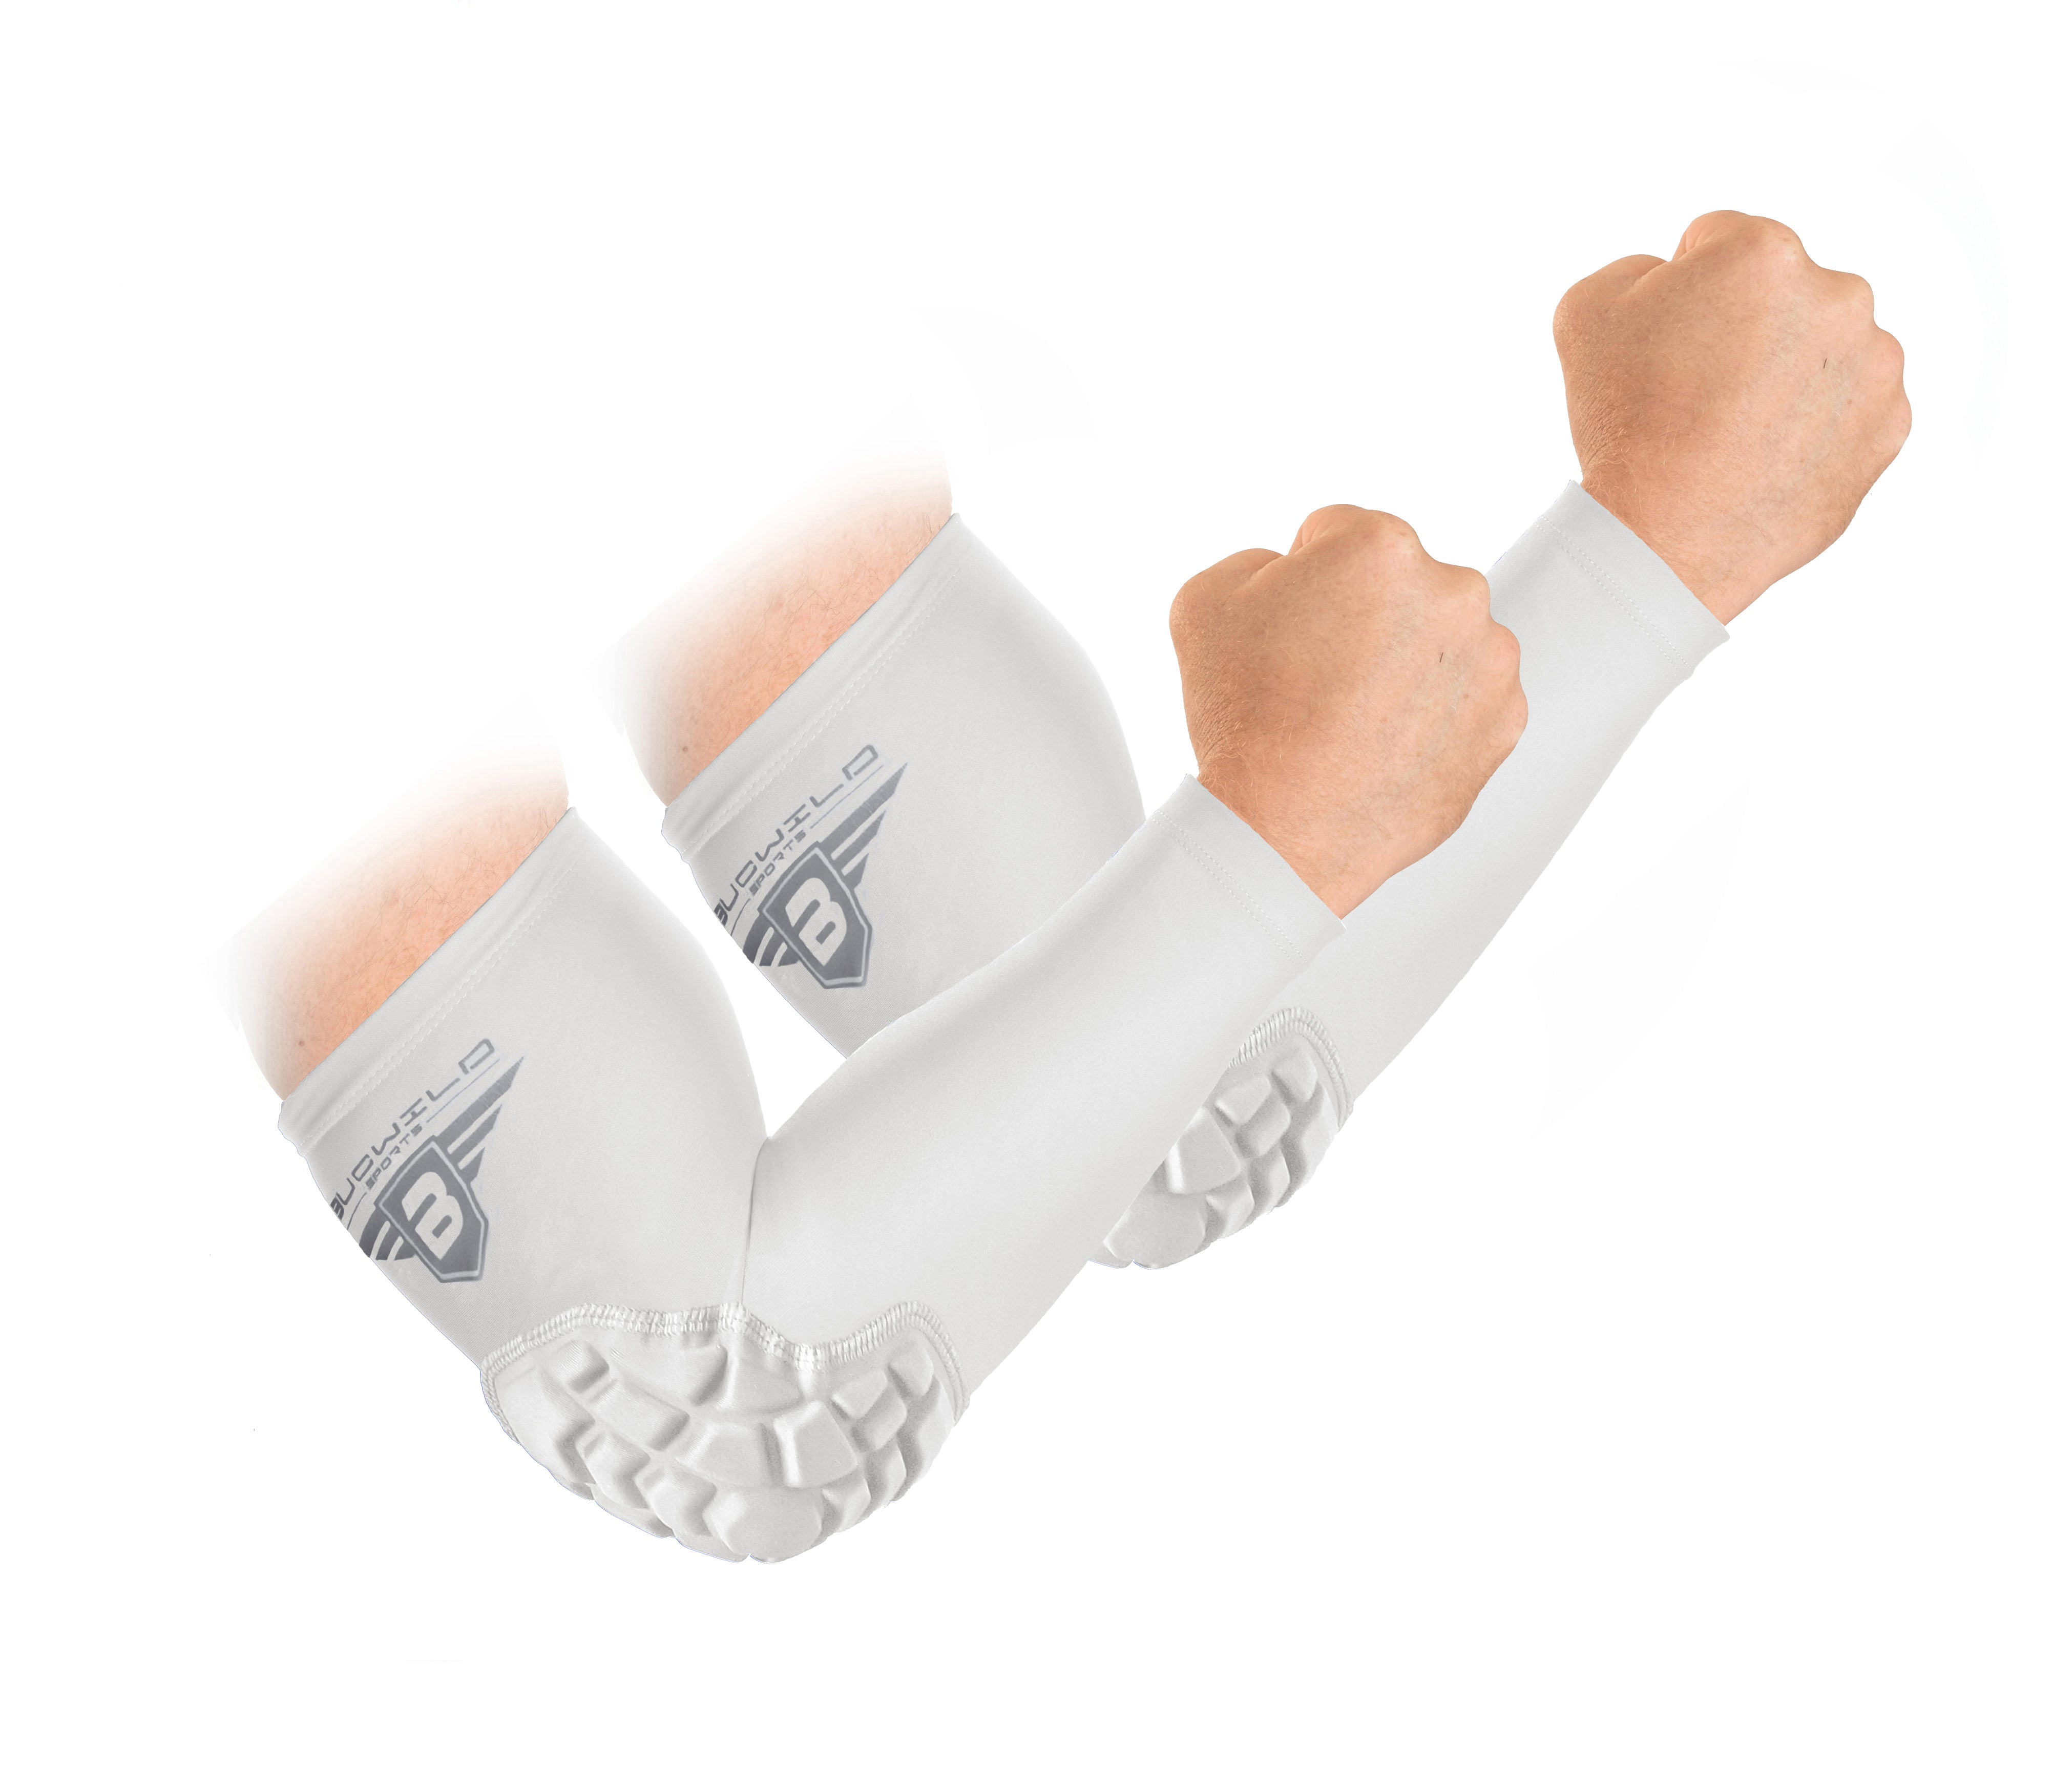 Padded Arm Sleeves - White